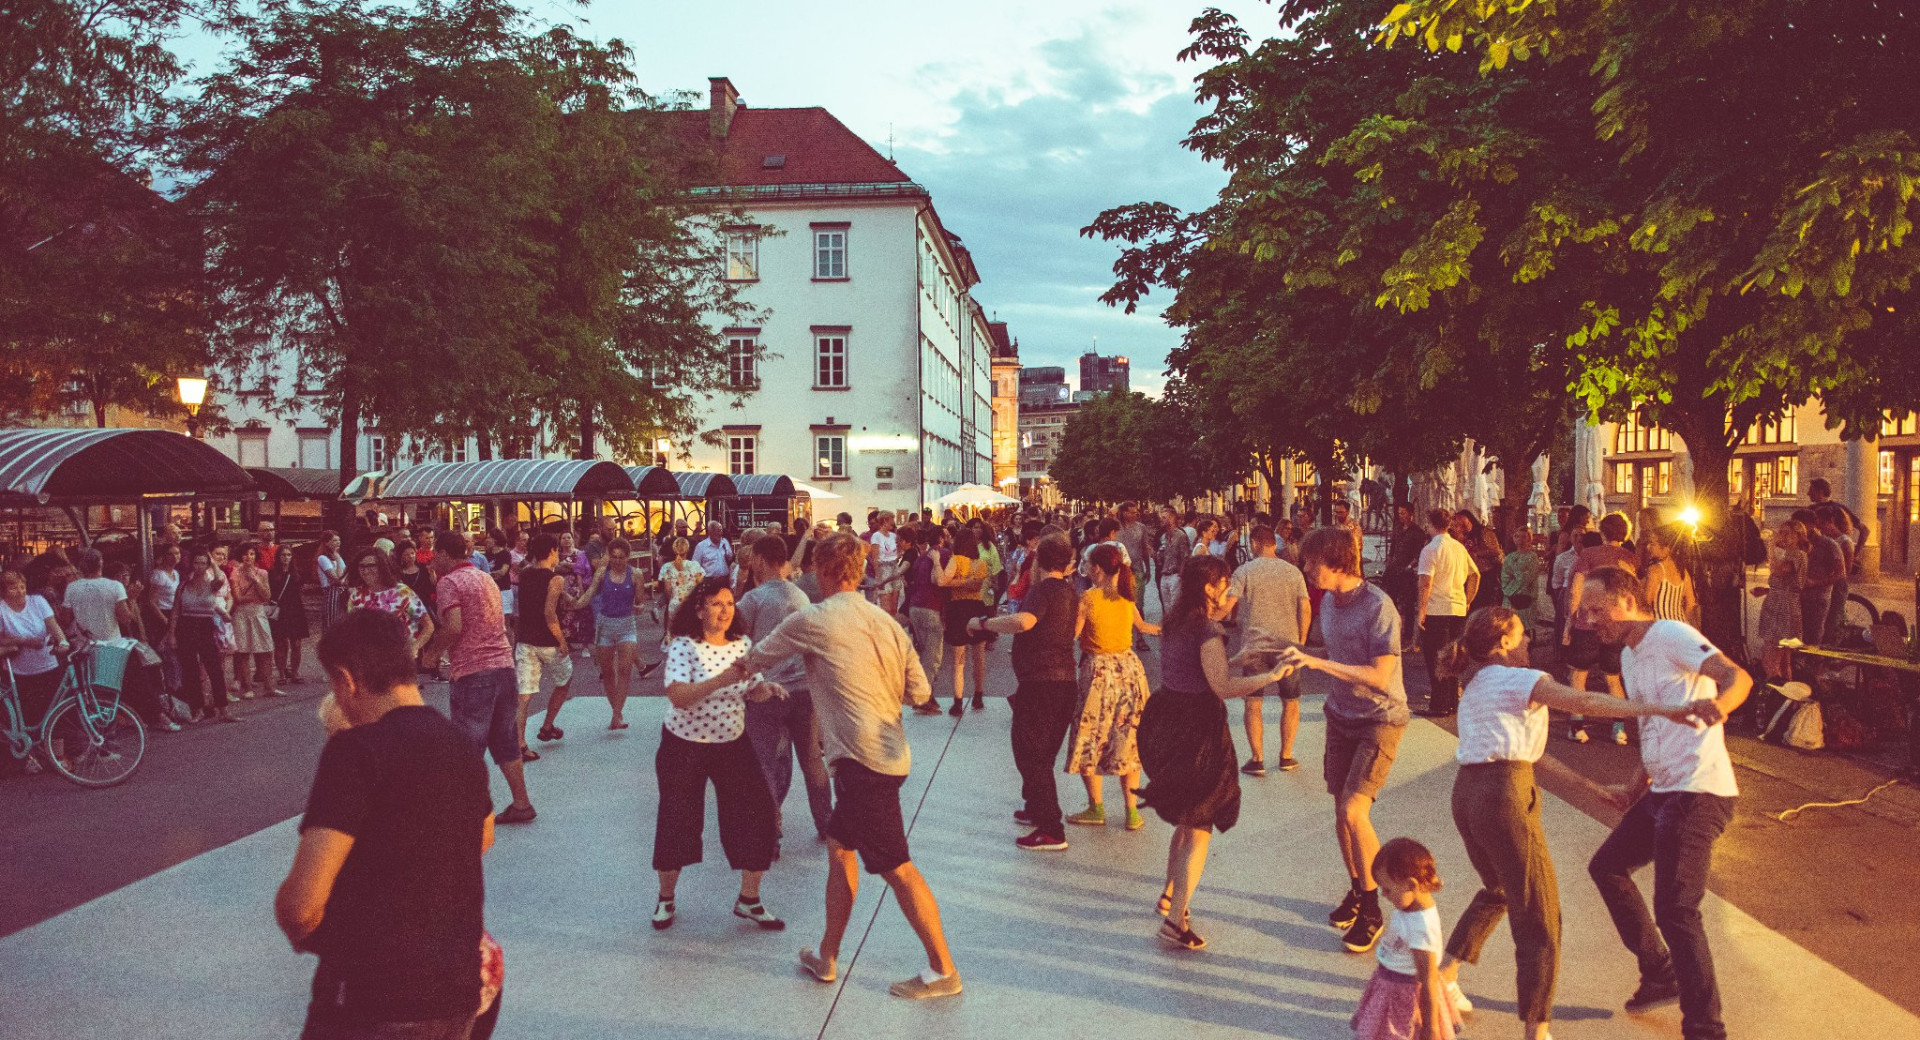 People dancing on the street.